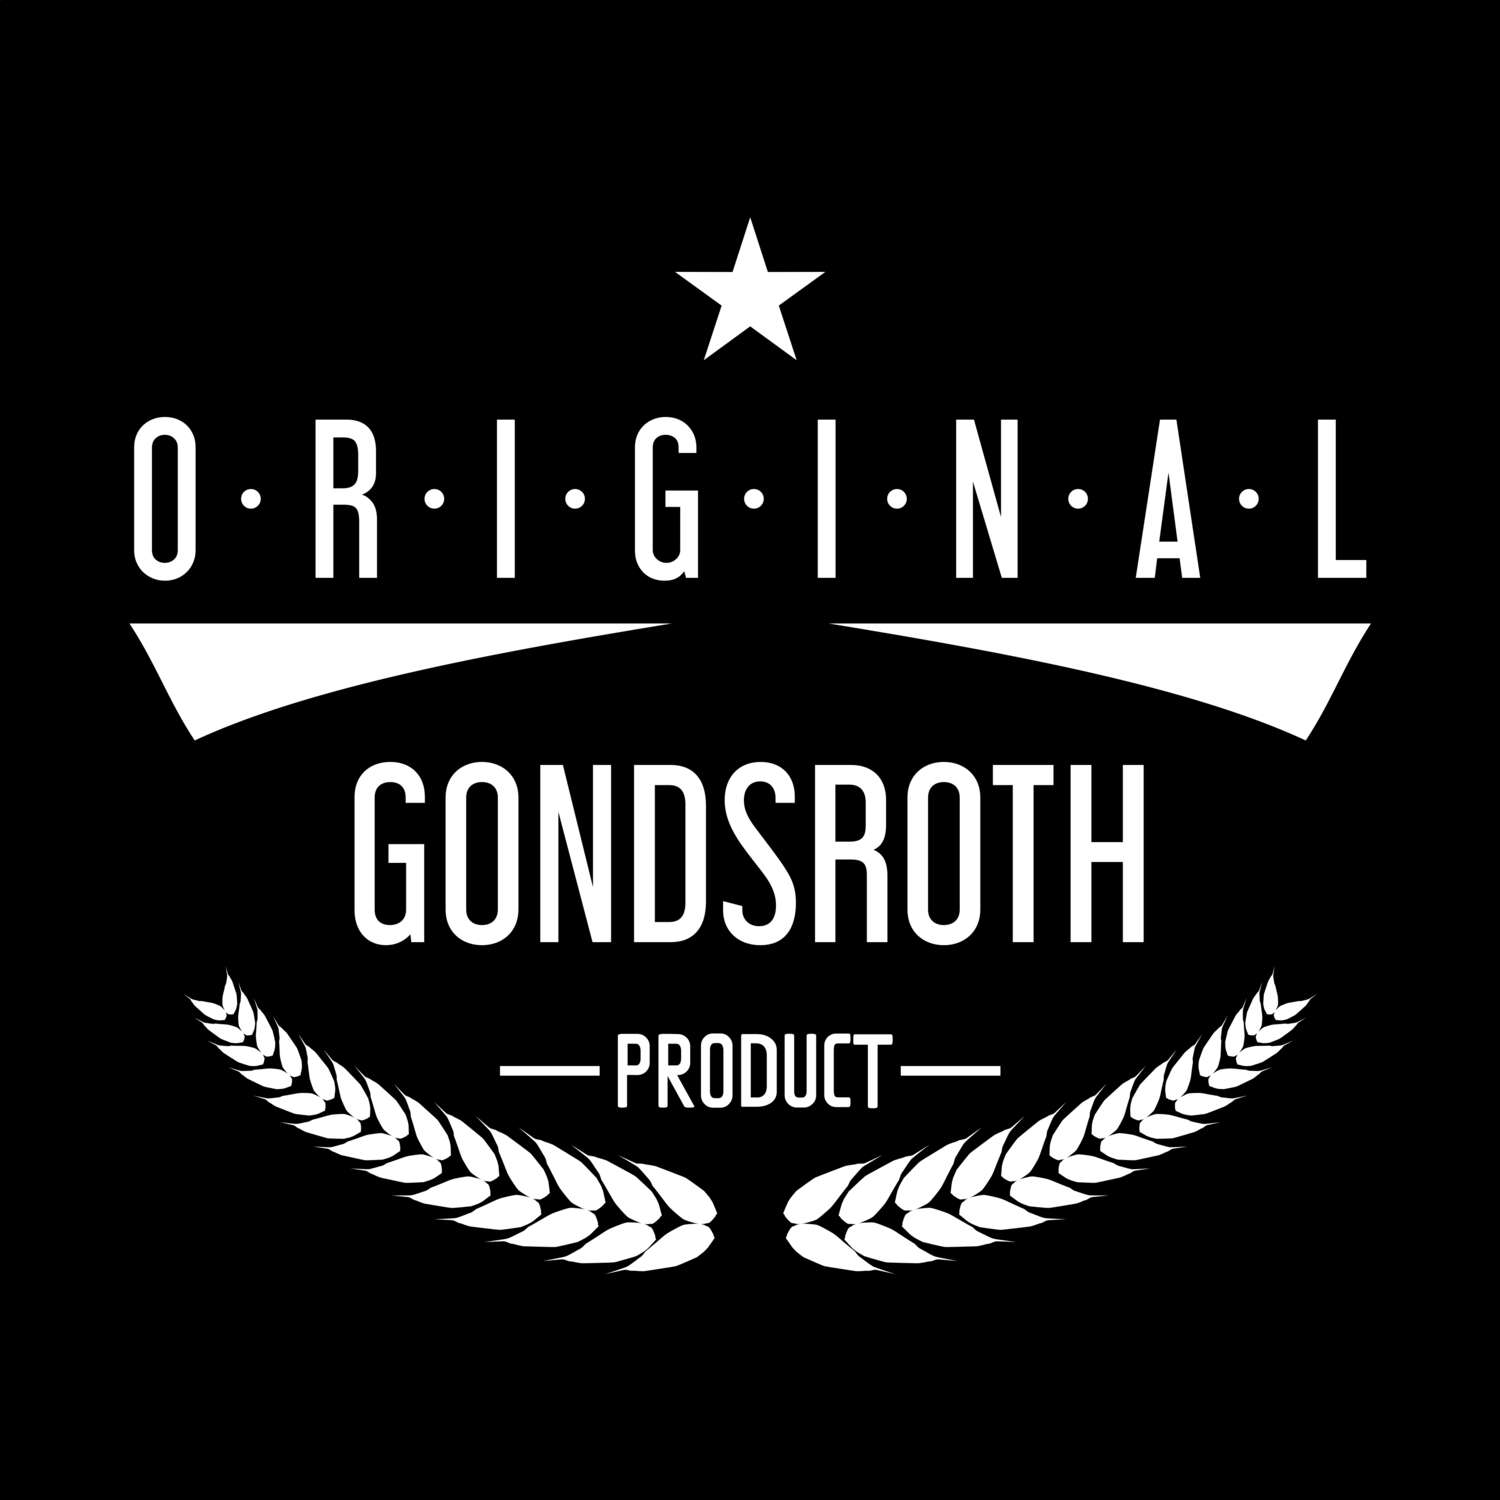 Gondsroth T-Shirt »Original Product«